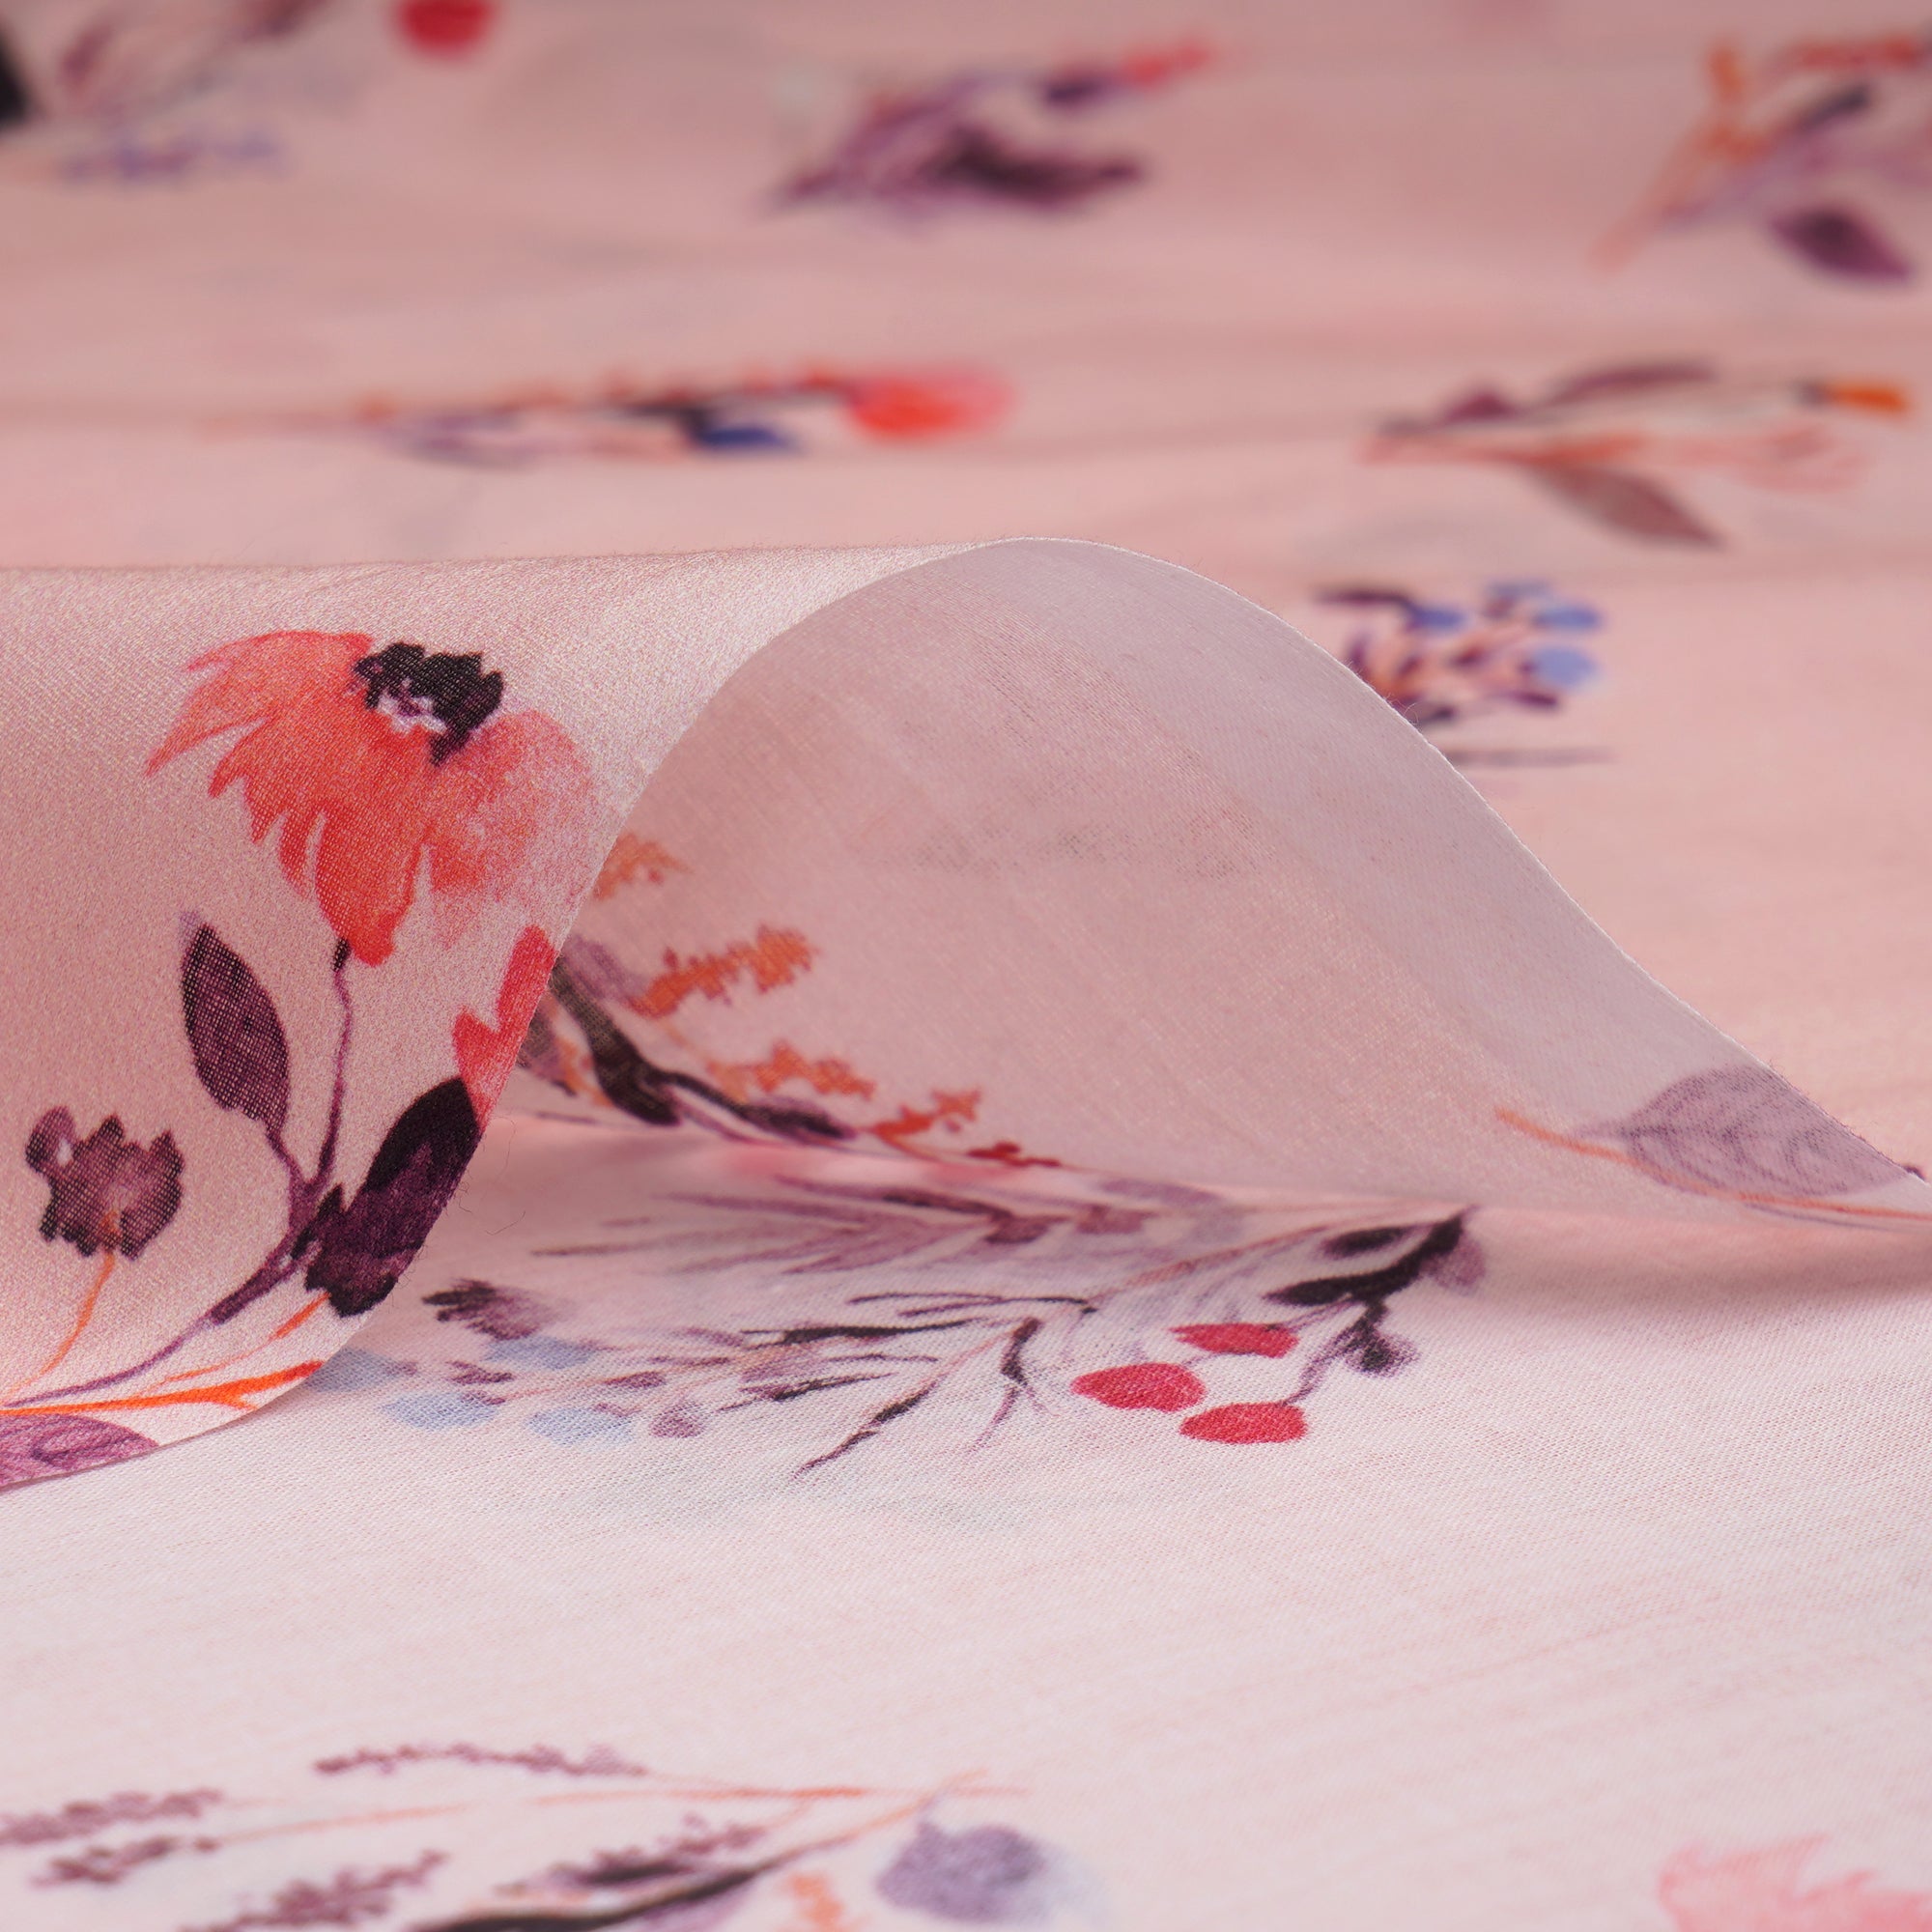 Powder Pink Floral Pattern Digital Print Voile Cotton Fabric